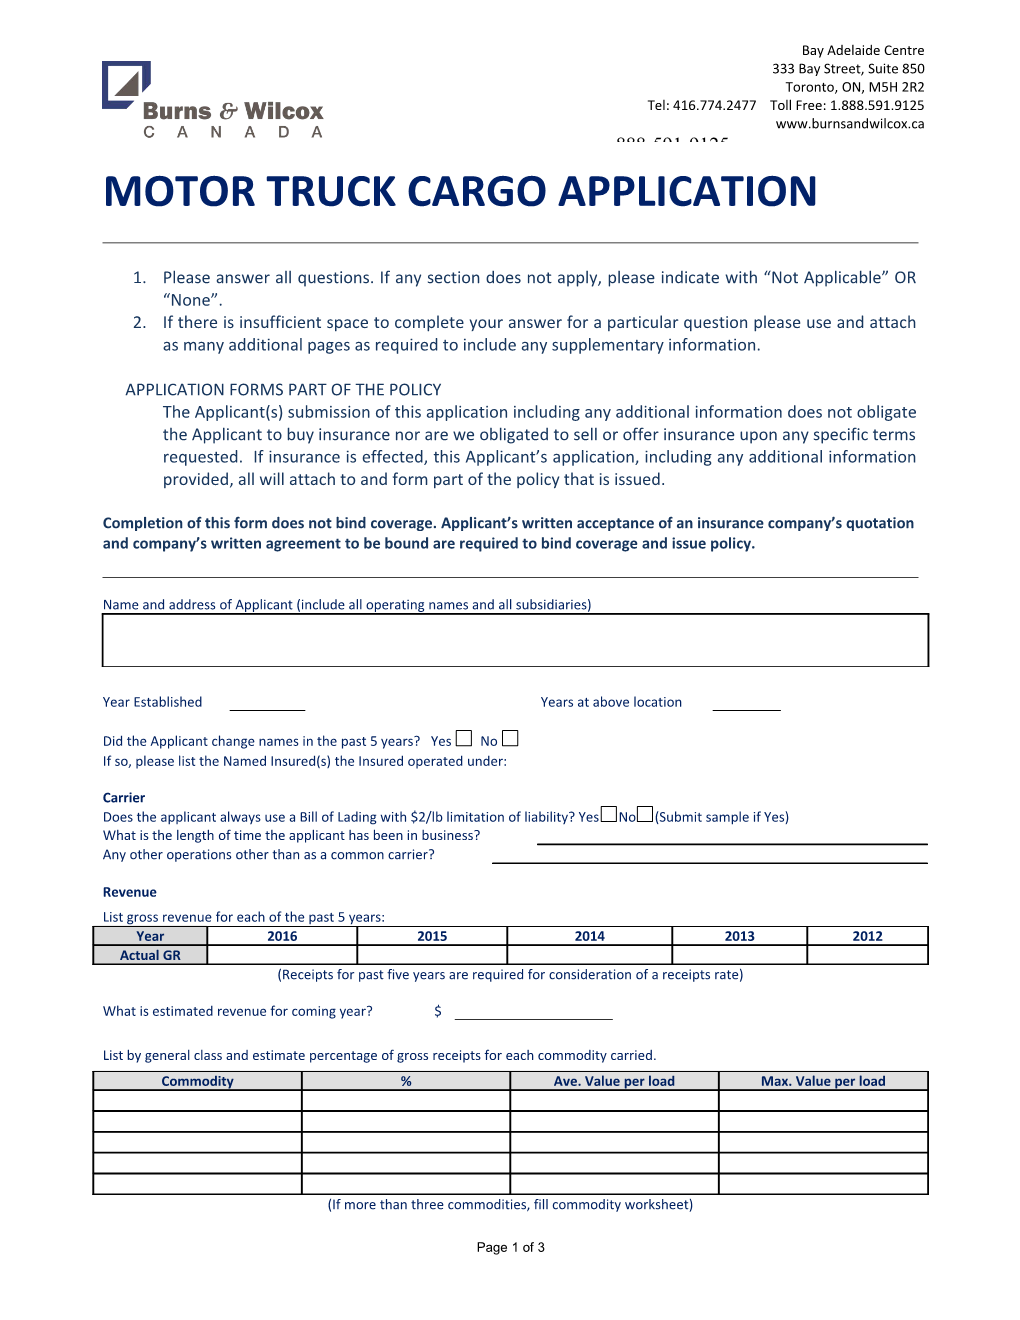 Motor Truck Cargo Application s1